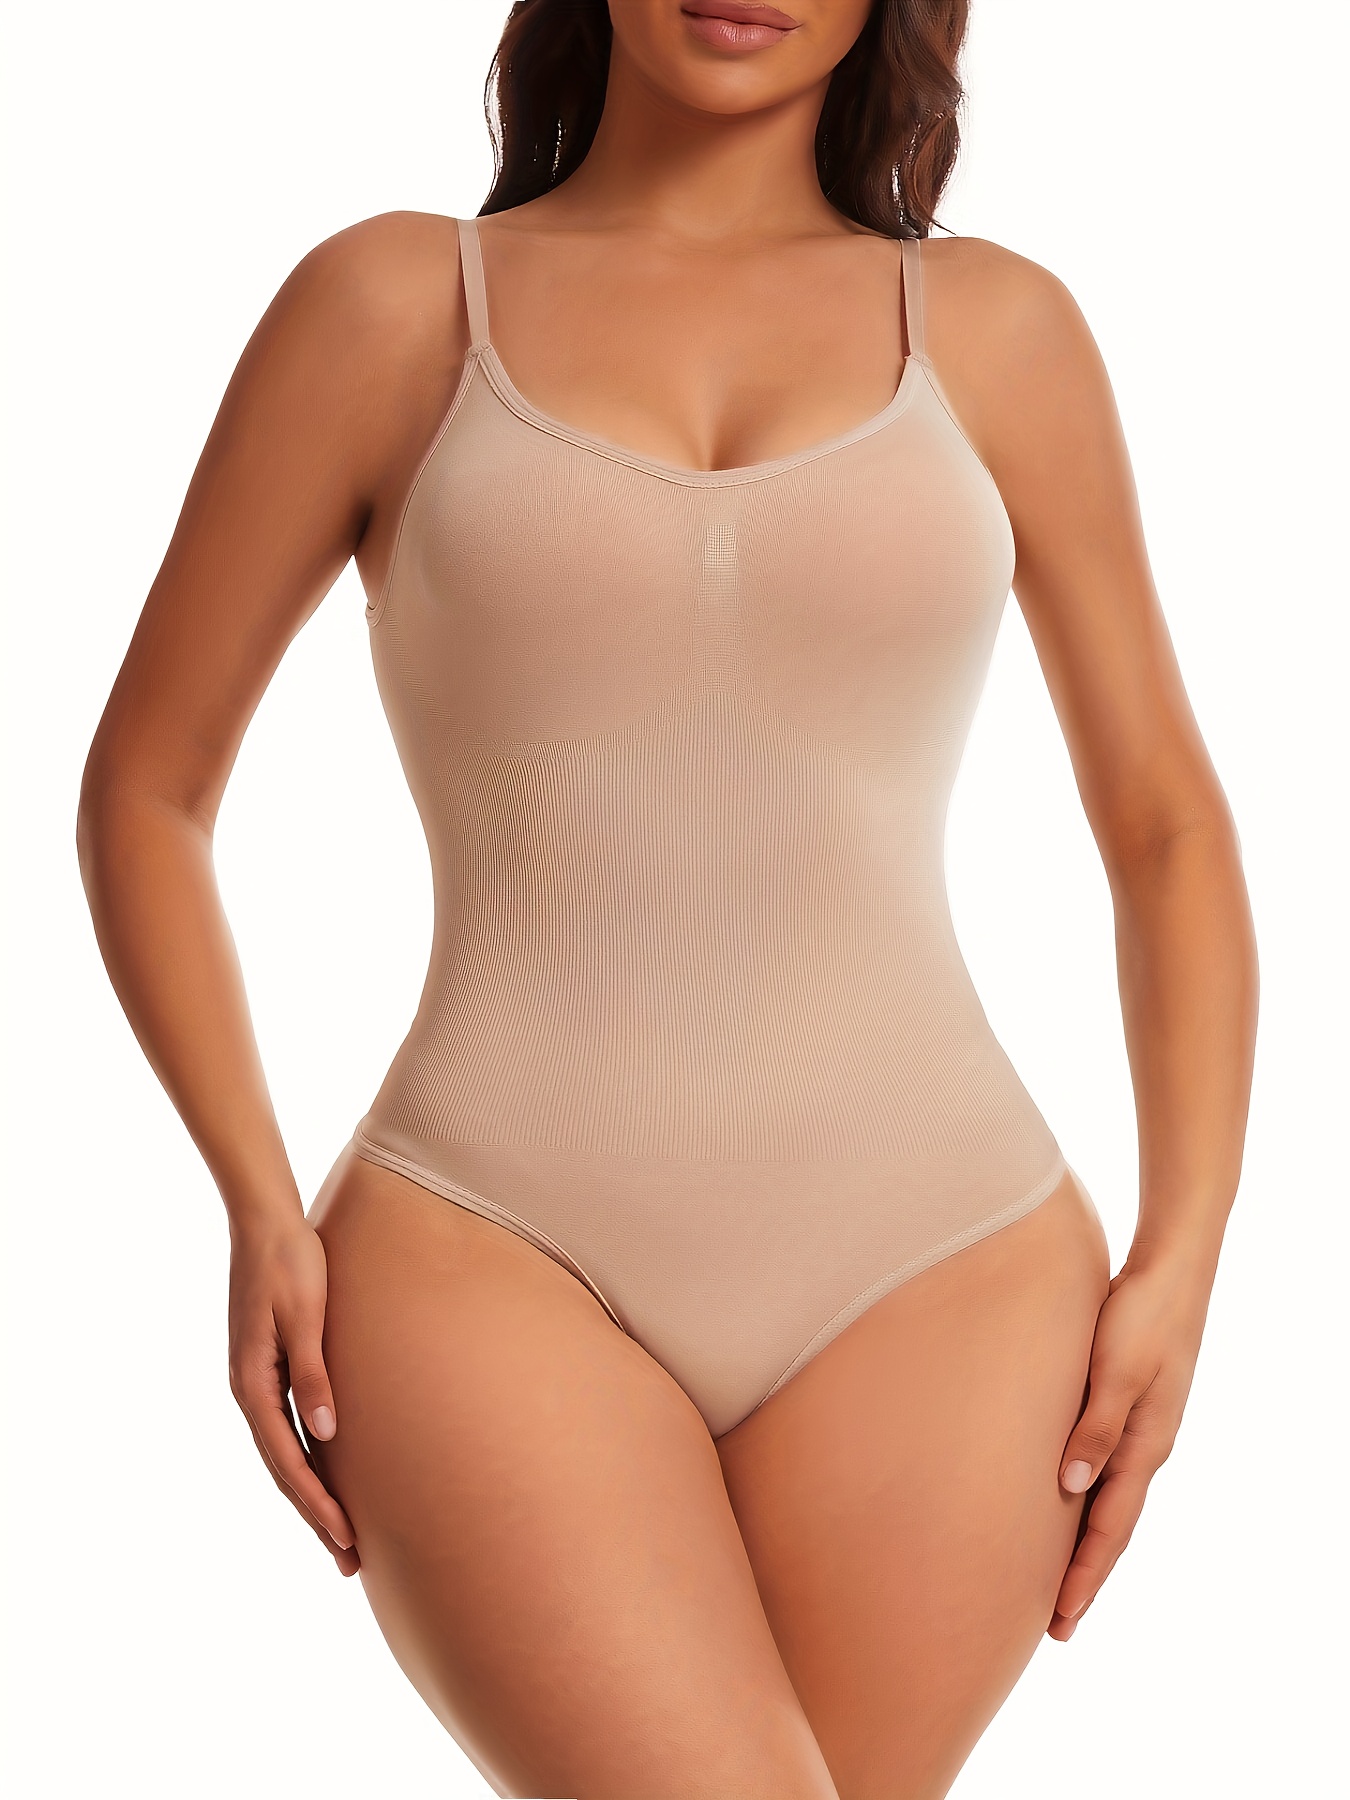 Women V Neck Full Slips Under Dresses Bodysuit Tummy Control Dress  Shapewear Seamless Body Shaper